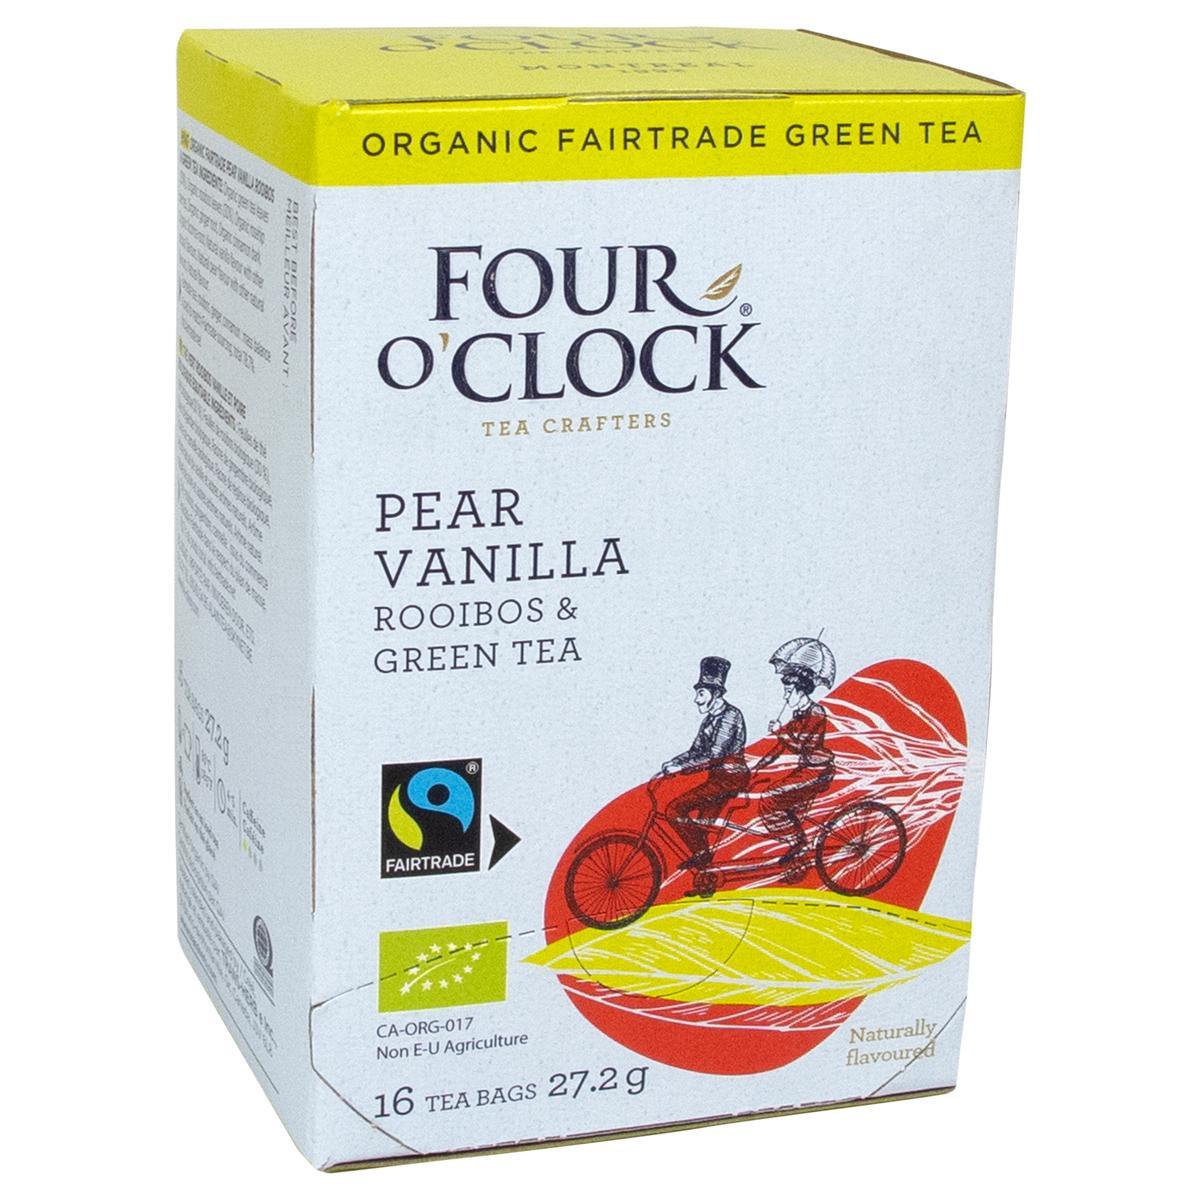 Four O’Clock's Four O'Clock GREEN TEA & ROOIBOS, VANILLA AND PEAR'